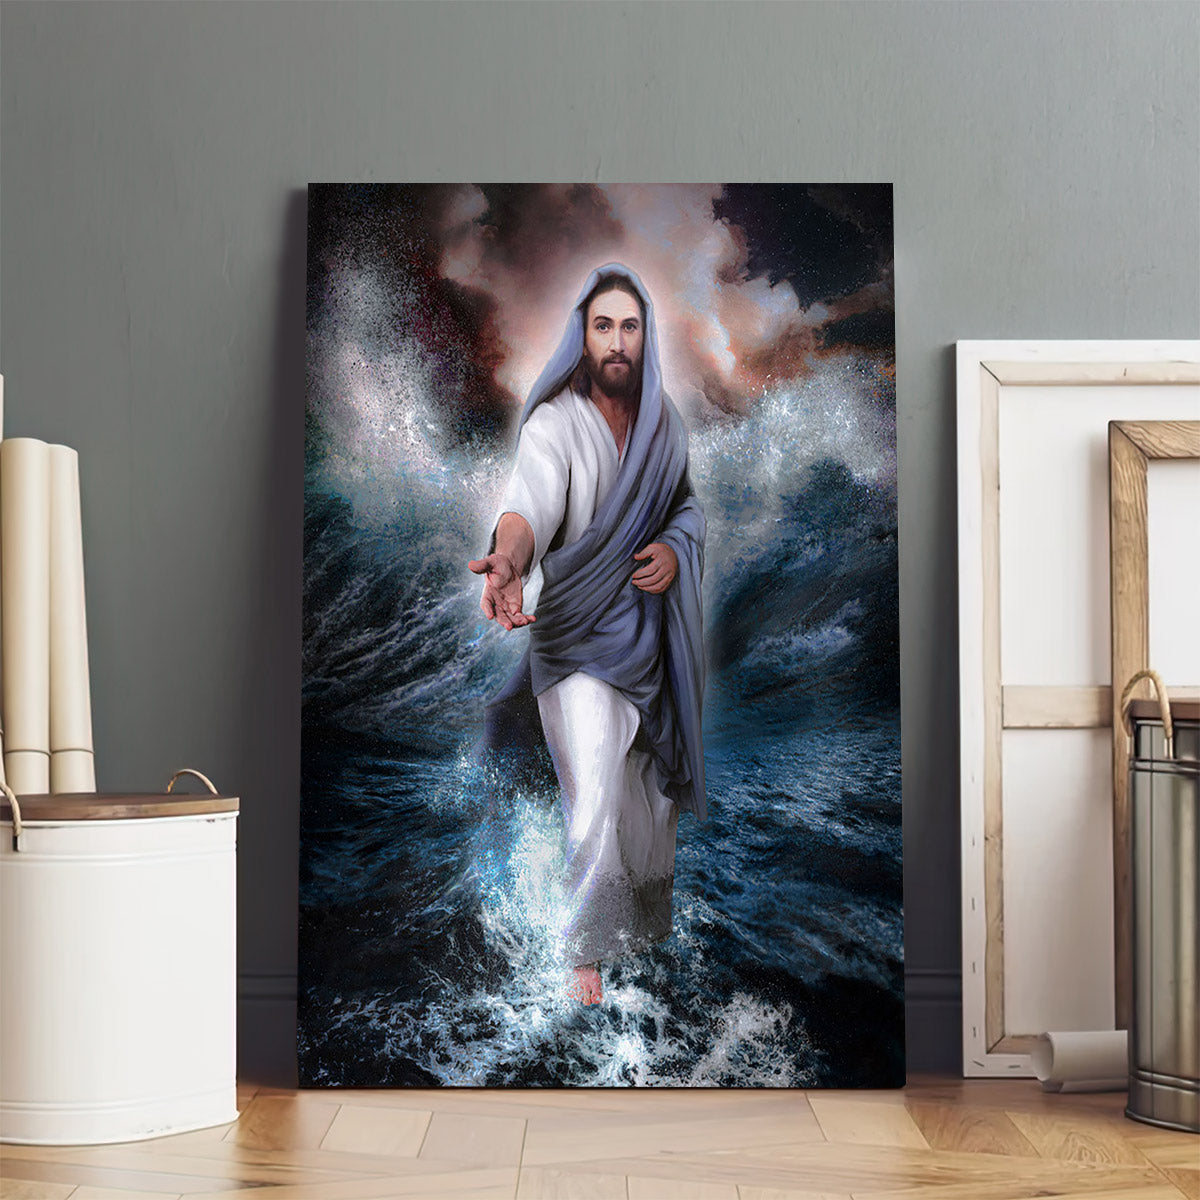 Focus On Me Canvas Picture - Jesus Christ Canvas Art - Christian Wall Canvas